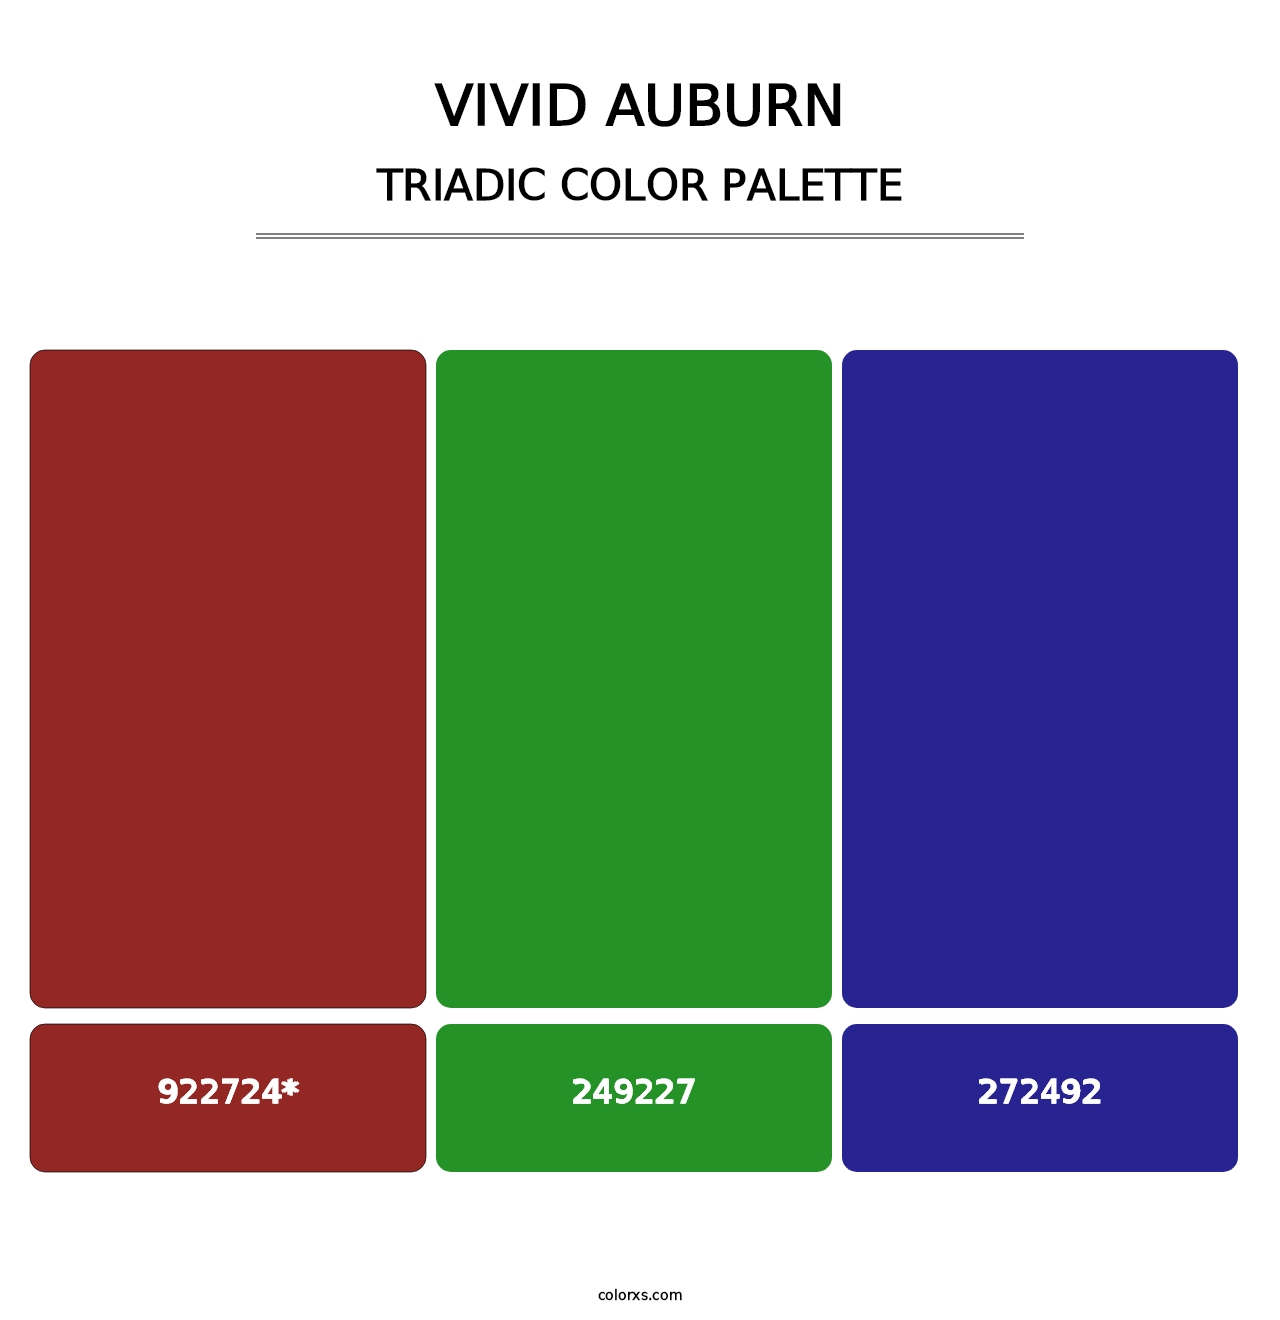 Vivid Auburn - Triadic Color Palette